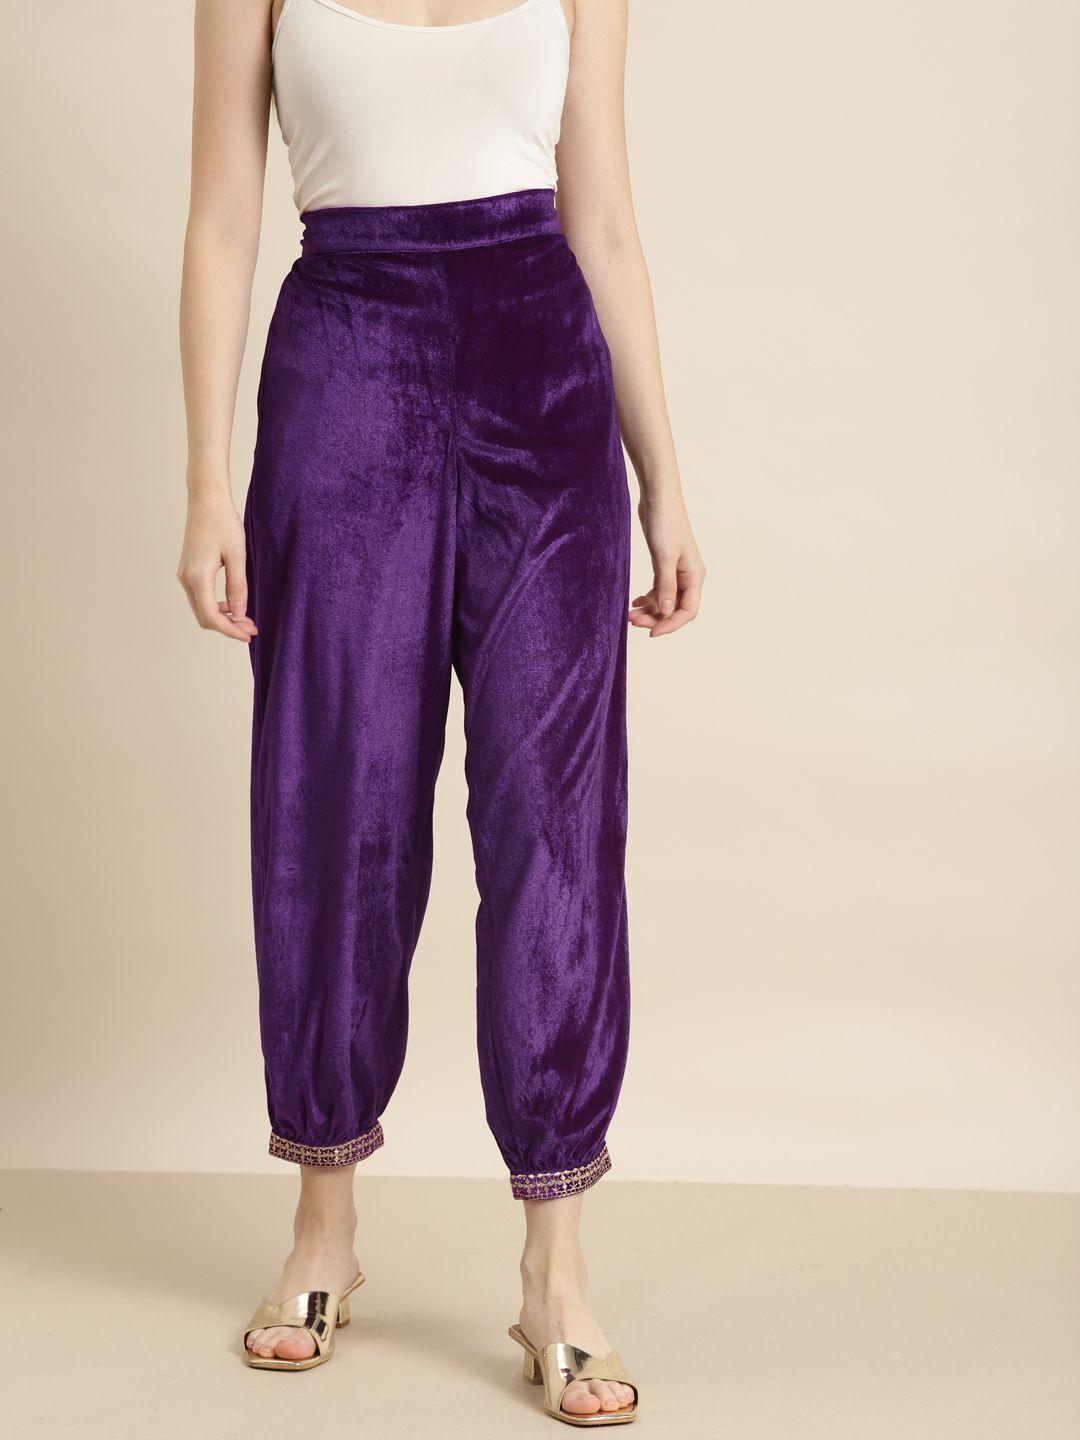 shae-by-sassafras-women-purple-trousers